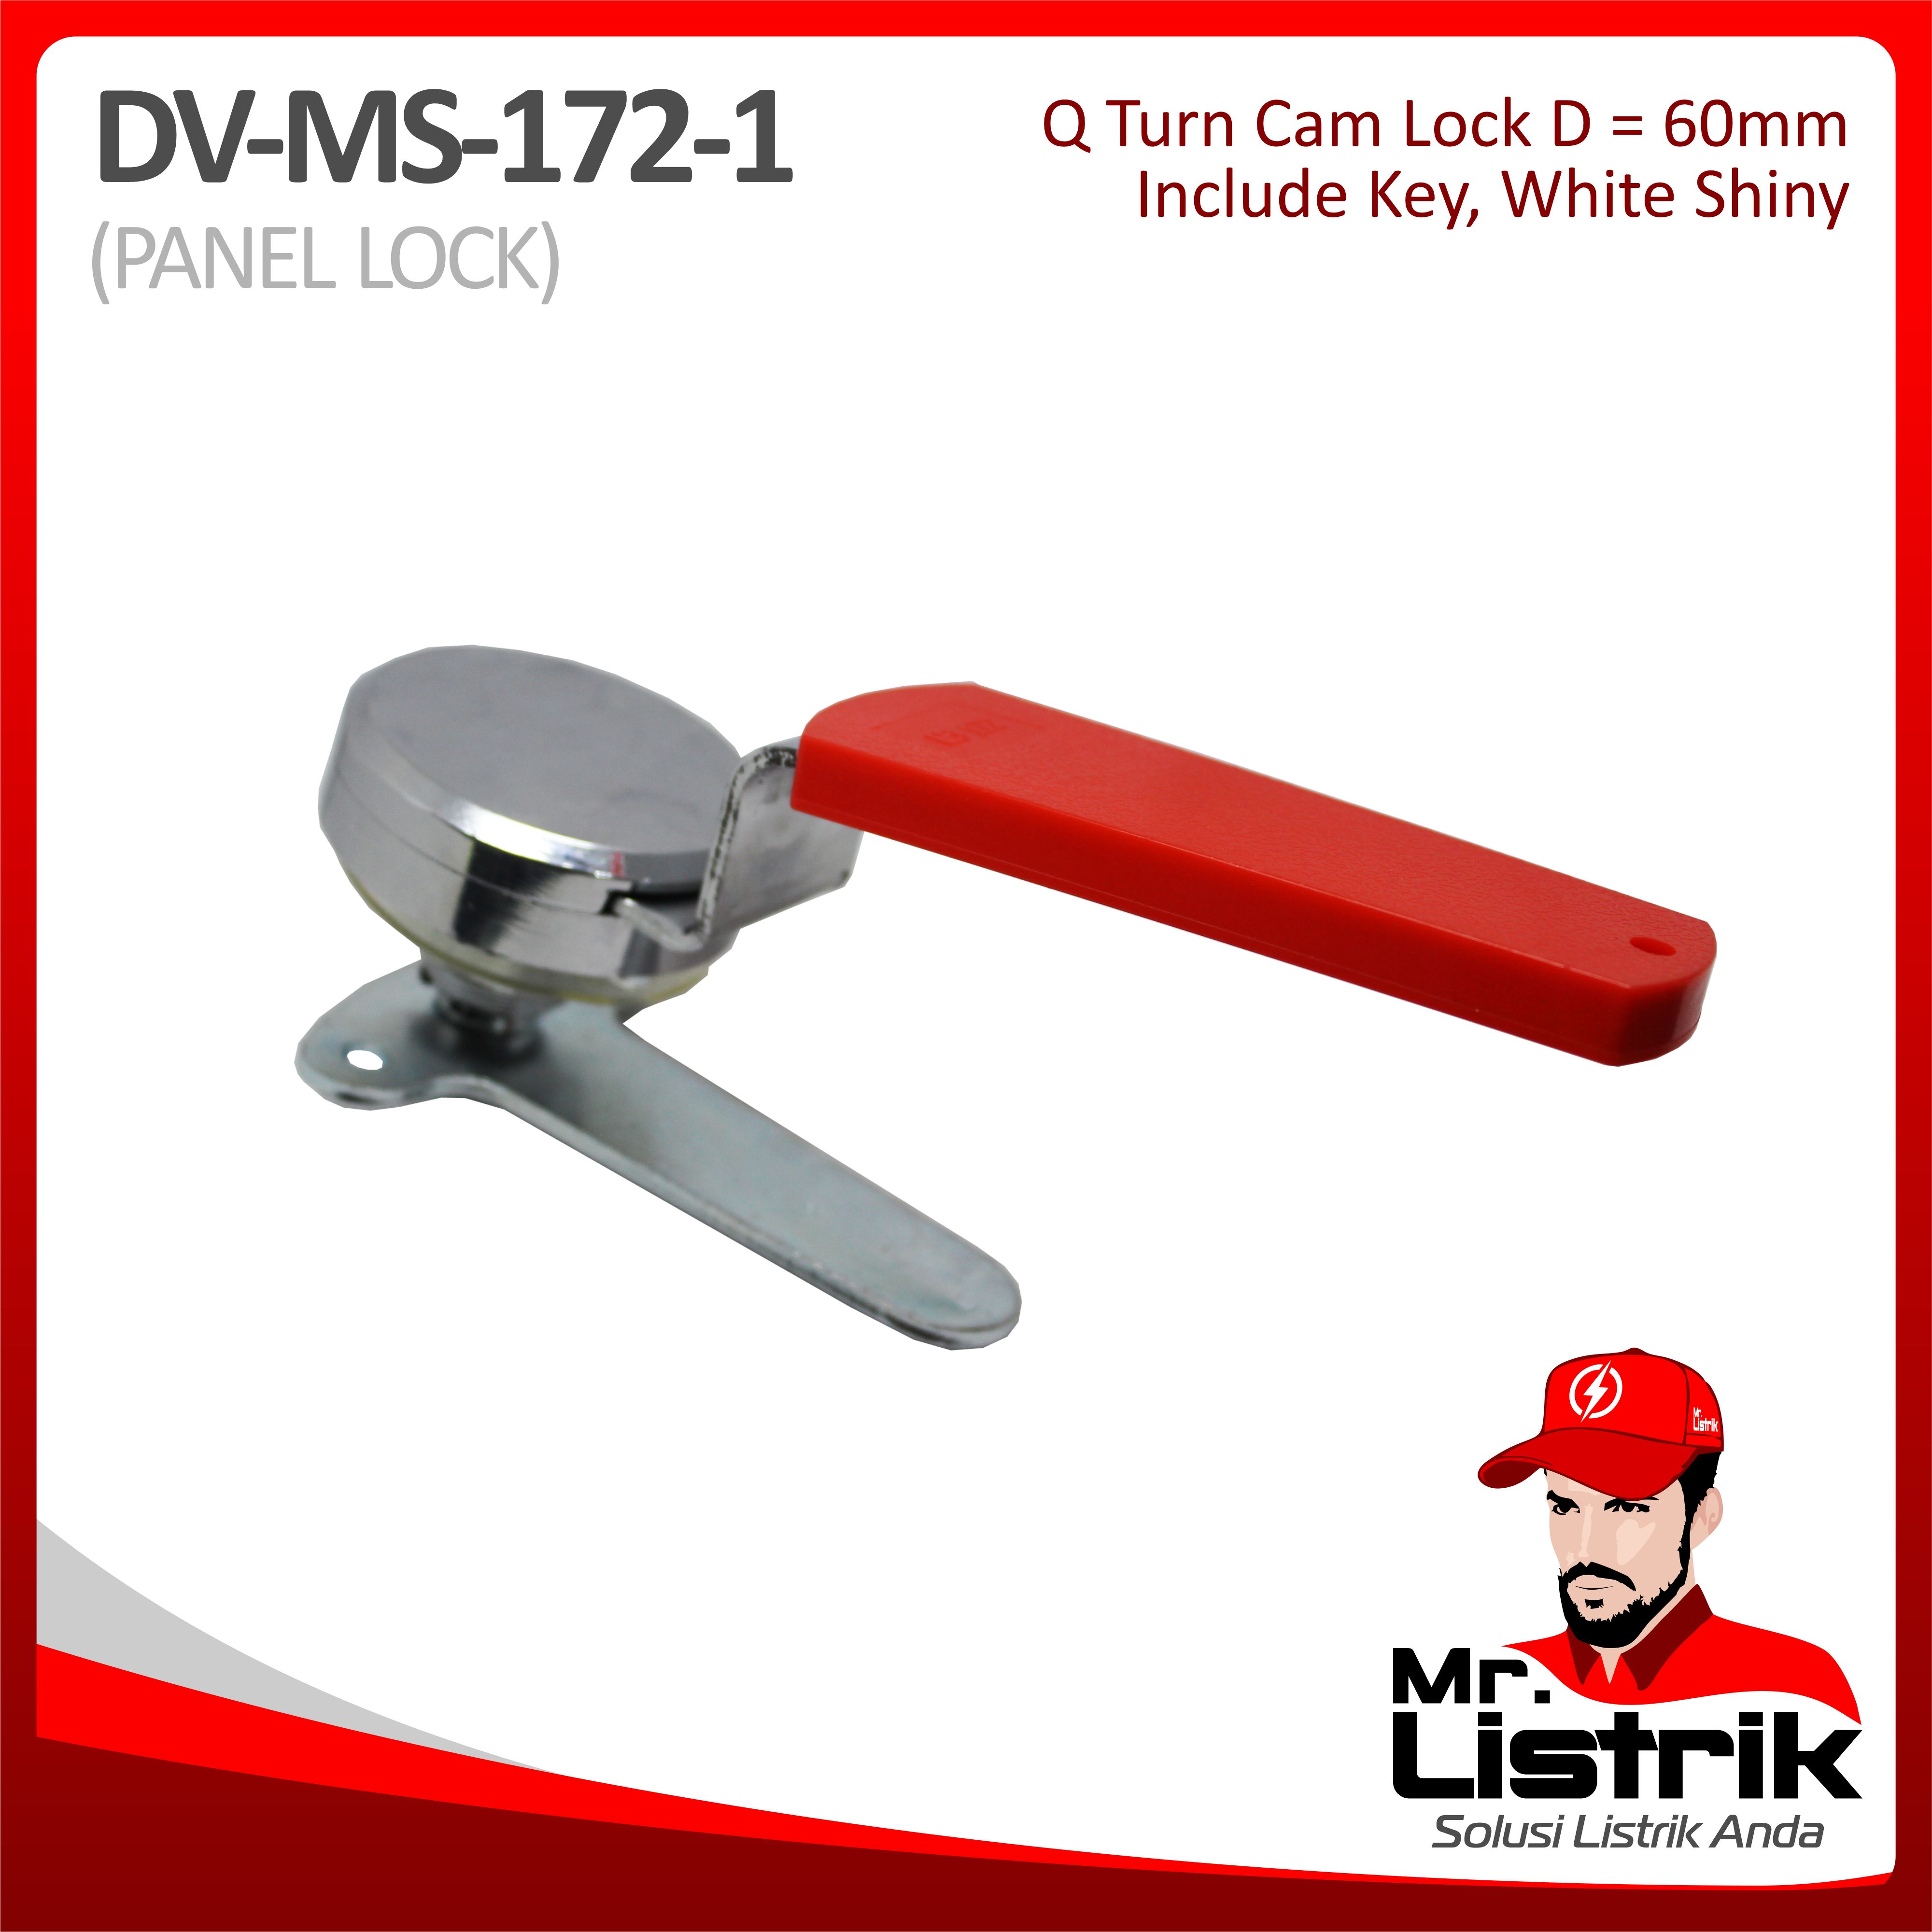 Q Turn Cam Lock 60mm With Key White Shiny DV MS-172-1